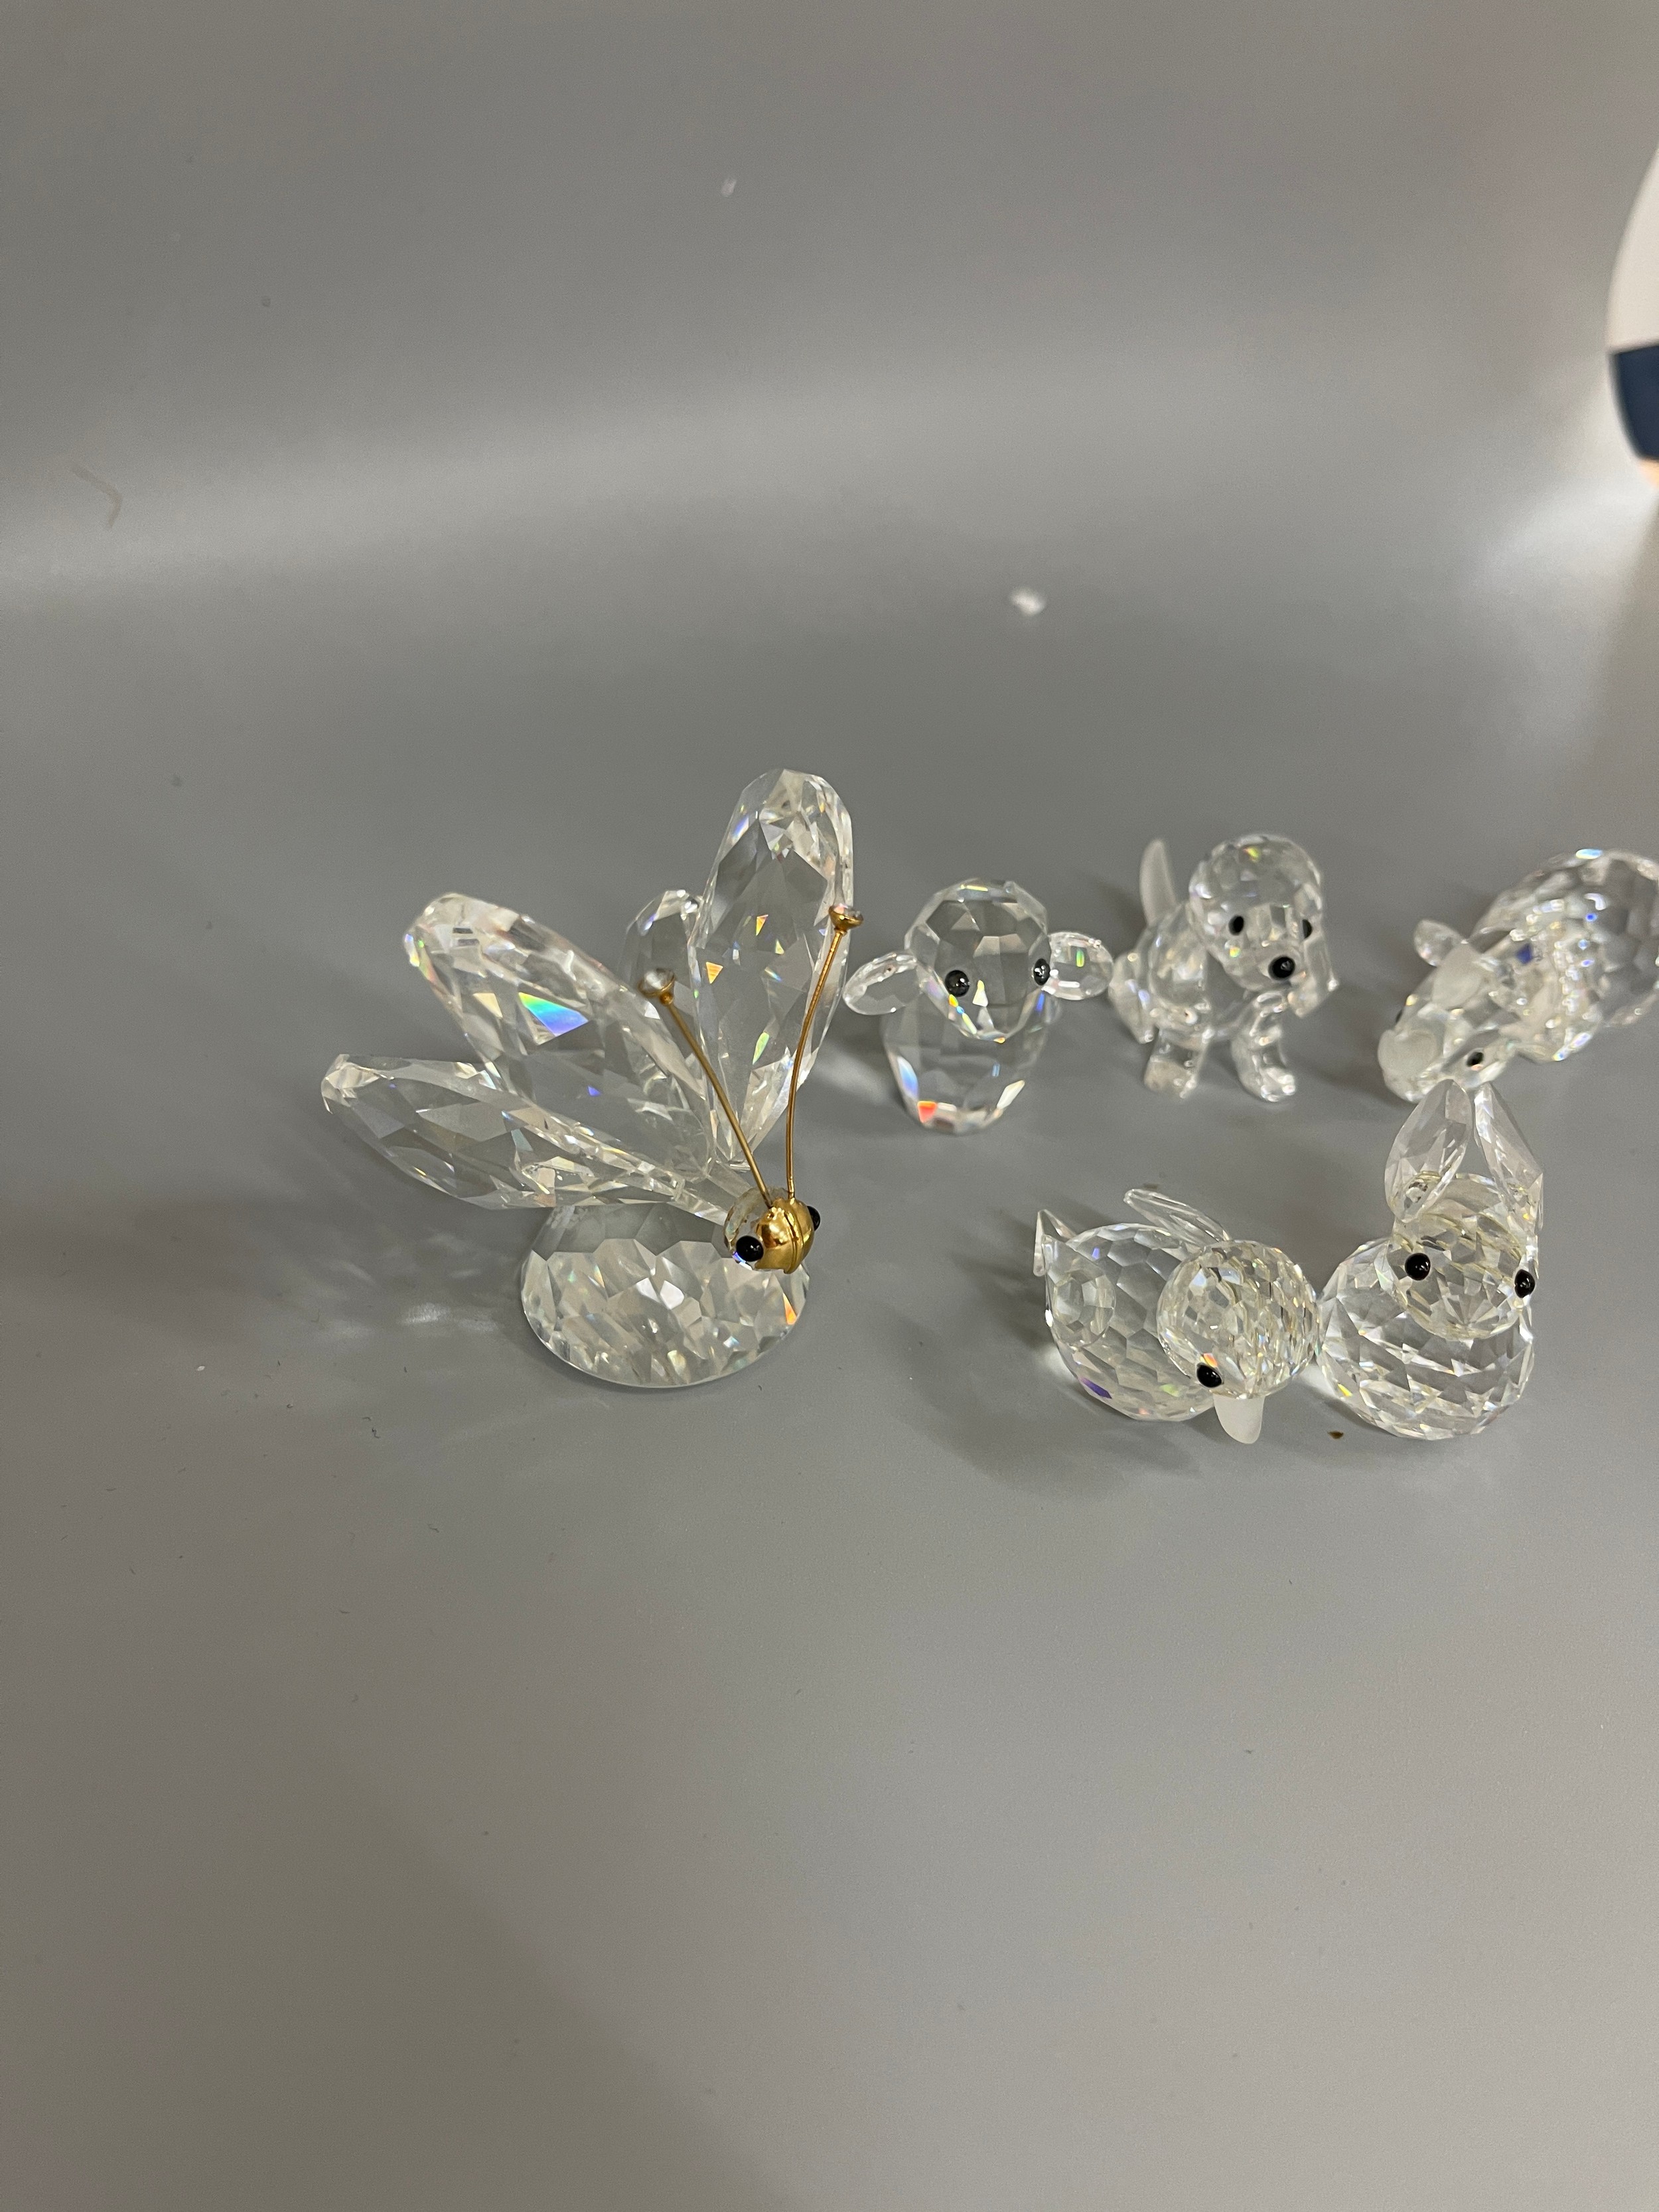 Selection of 6 Swarvoski glass figures includes Butterfly, lamb, rhino etc - Image 3 of 4